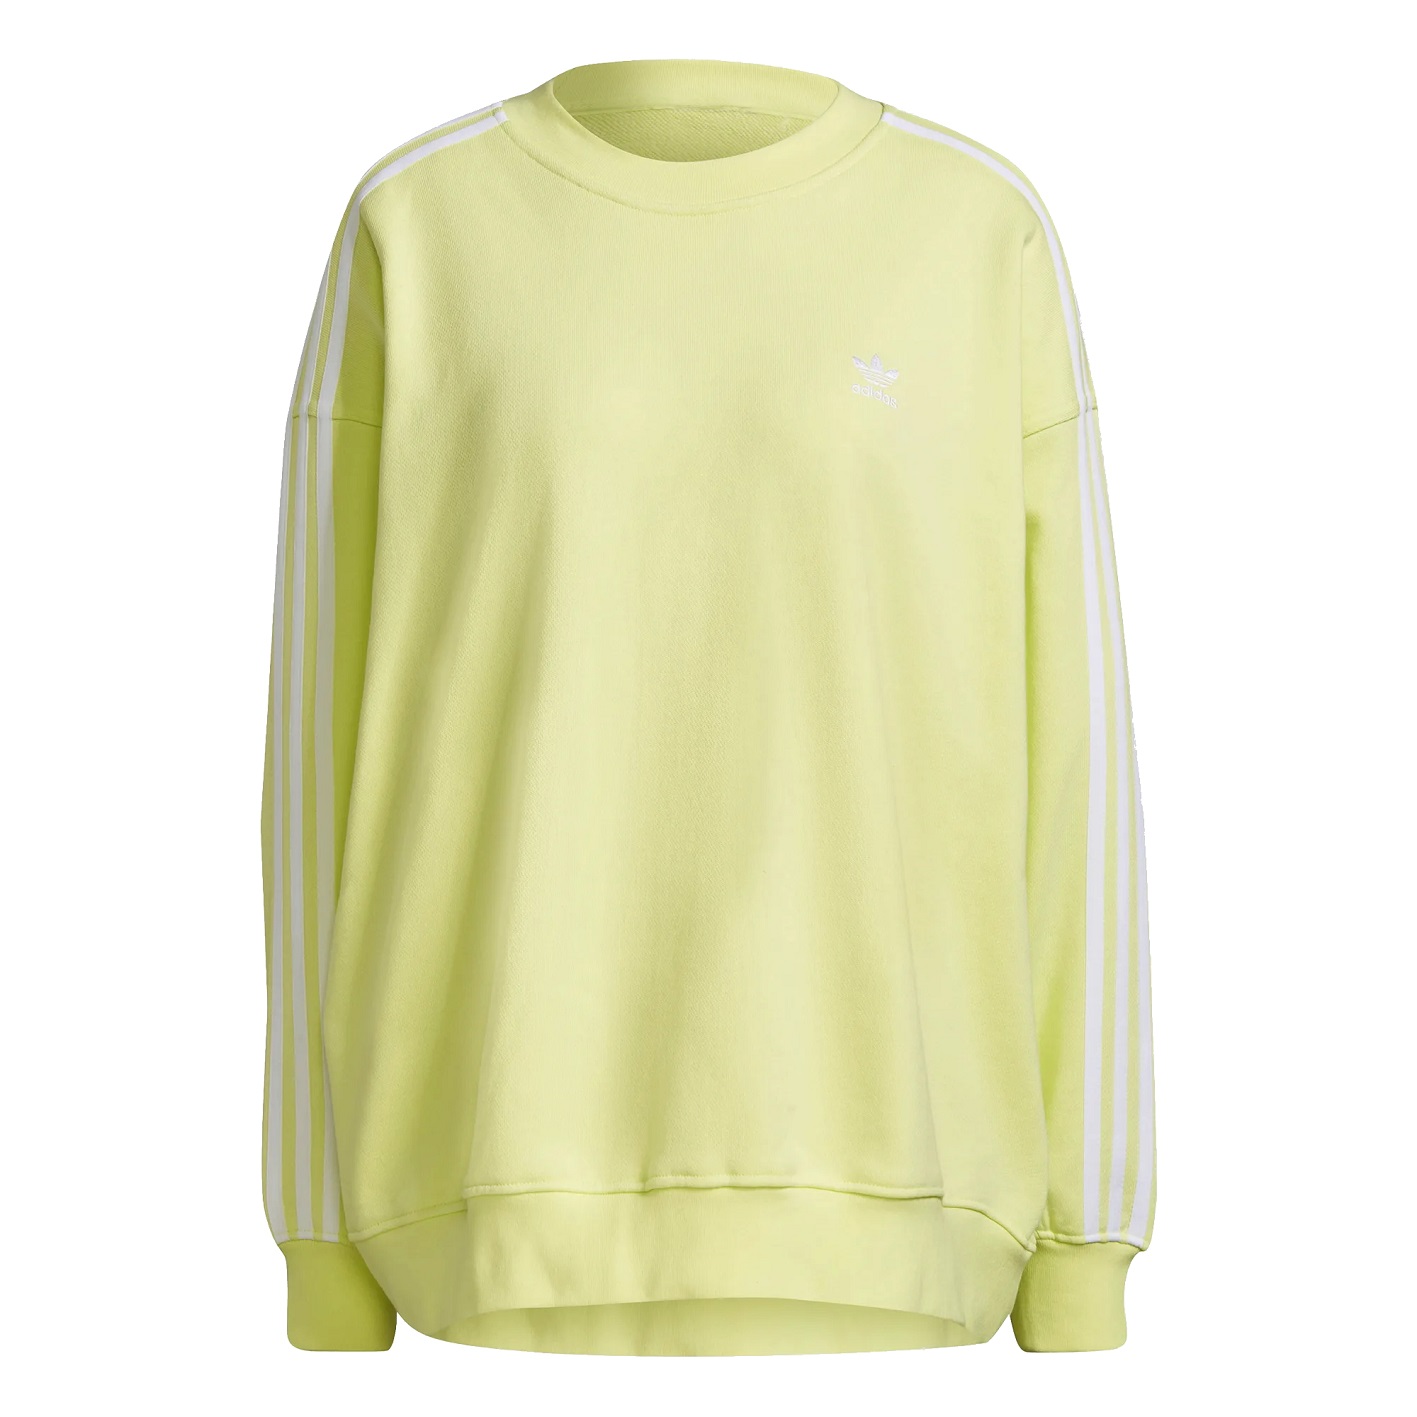 ☆ Adidas Oversized Damen Sweatshirt gelb - hier bestellen!